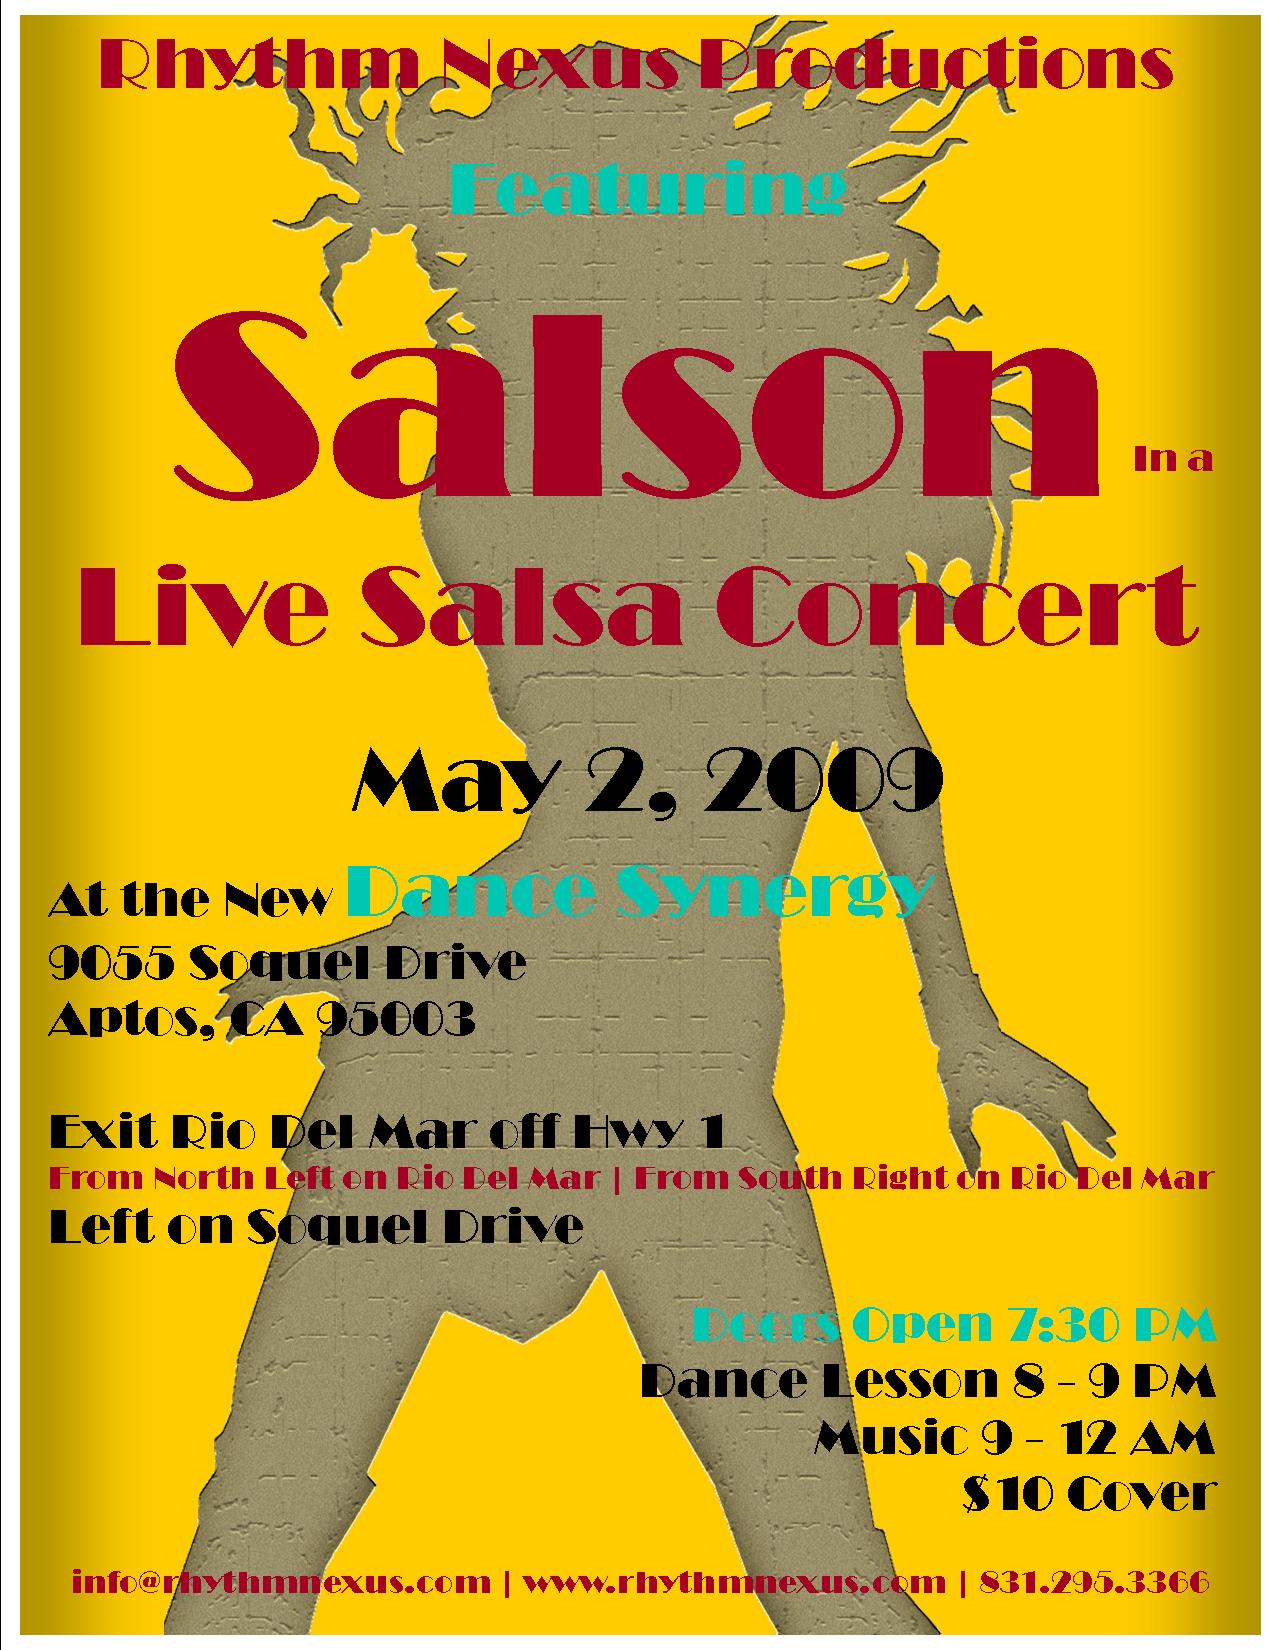 Salson at Dance Synergy, Saturday Aptos May 2